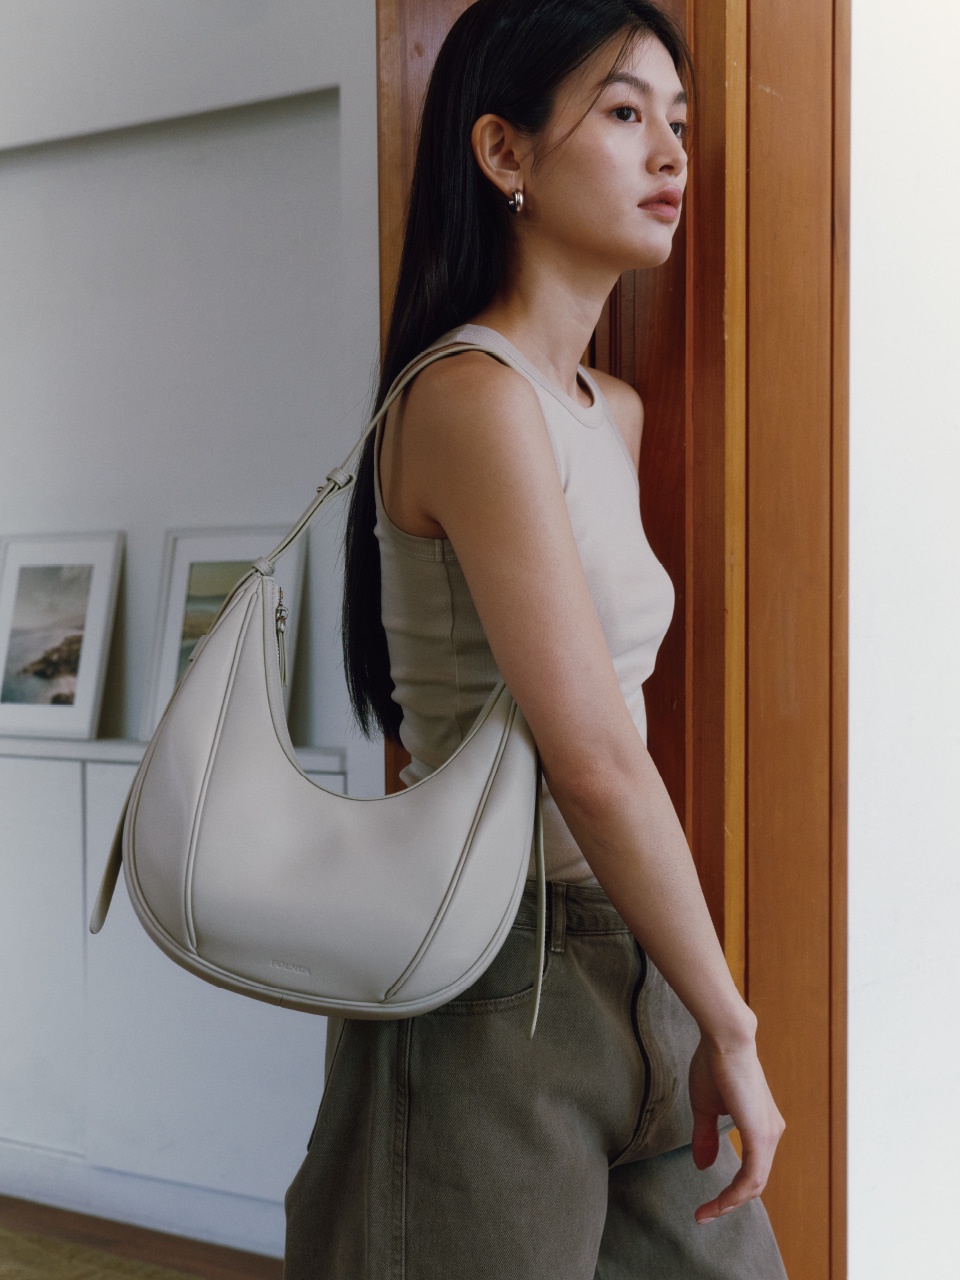 FOLNUA] Oval bag Plain (5colors) 牛皮- 韓國設計師品牌包/ 單肩包